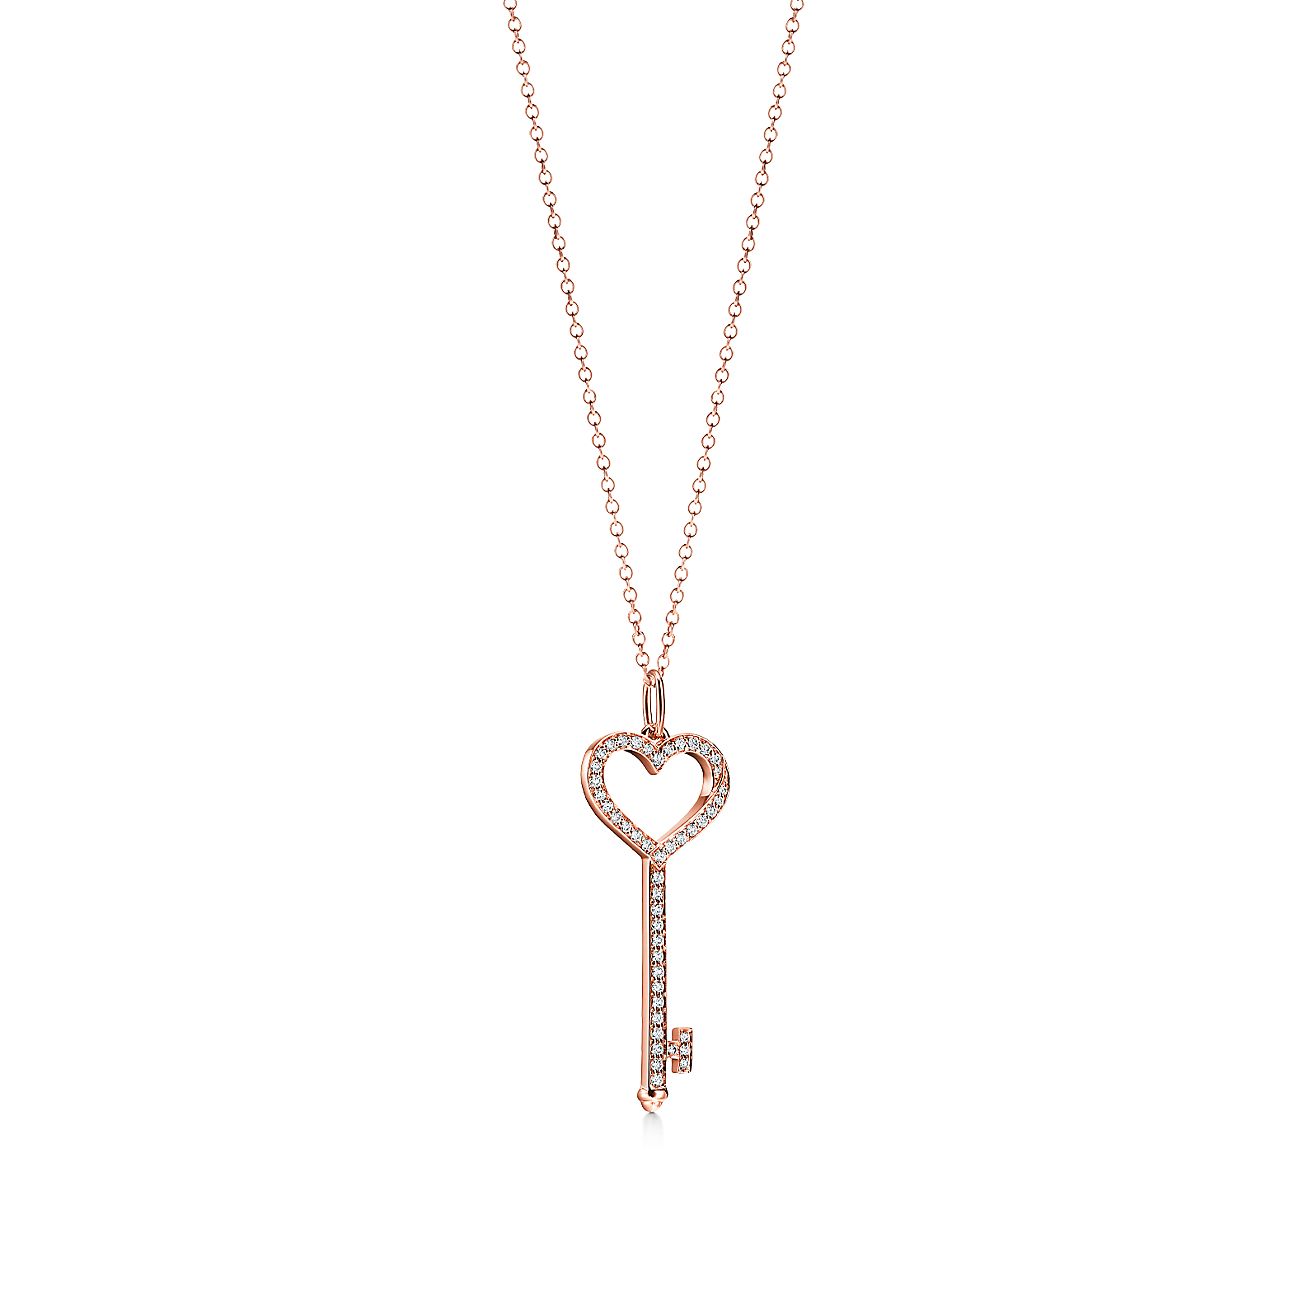 18K White Gold Diamond Heart Lock Pendant and Key Necklace